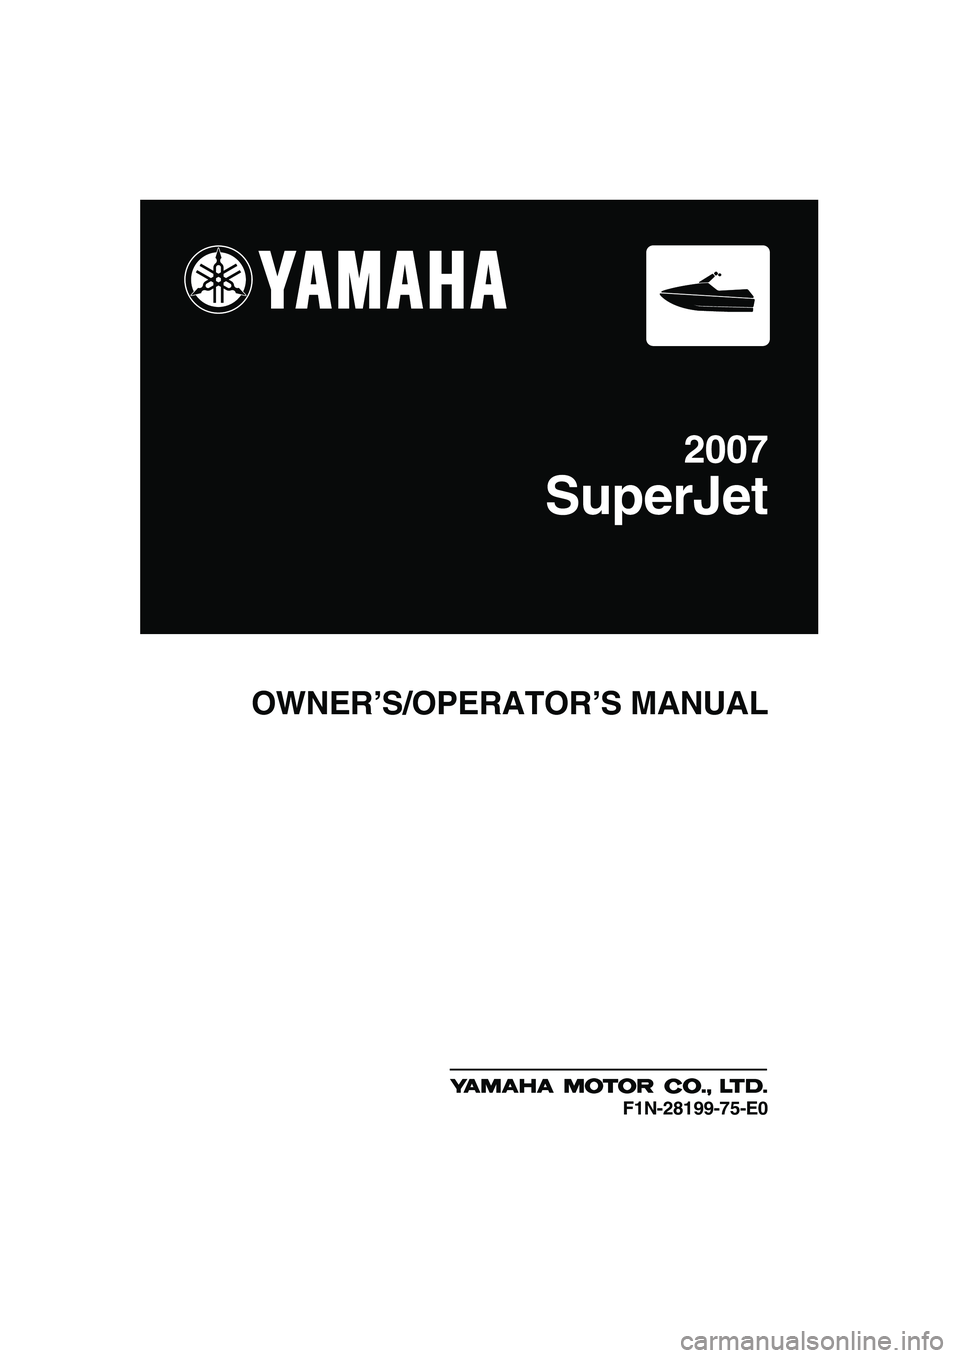 YAMAHA SUPERJET 2007  Owners Manual 